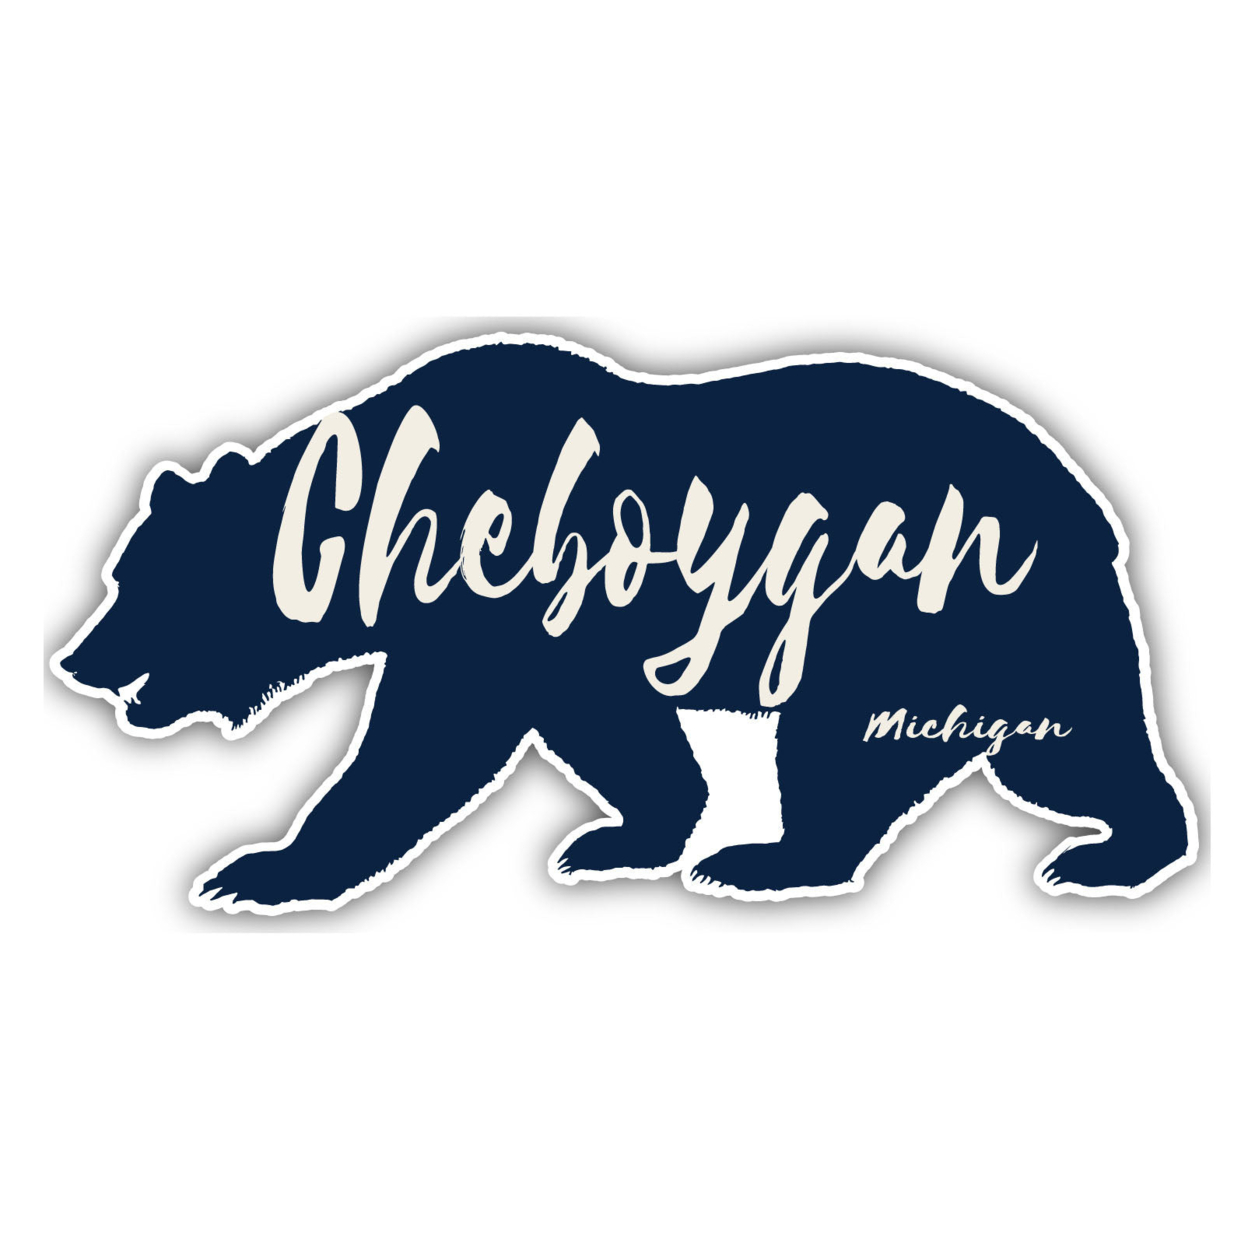 Cheboygan Michigan Souvenir Decorative Stickers (Choose Theme And Size) - Single Unit, 10-Inch, Bear